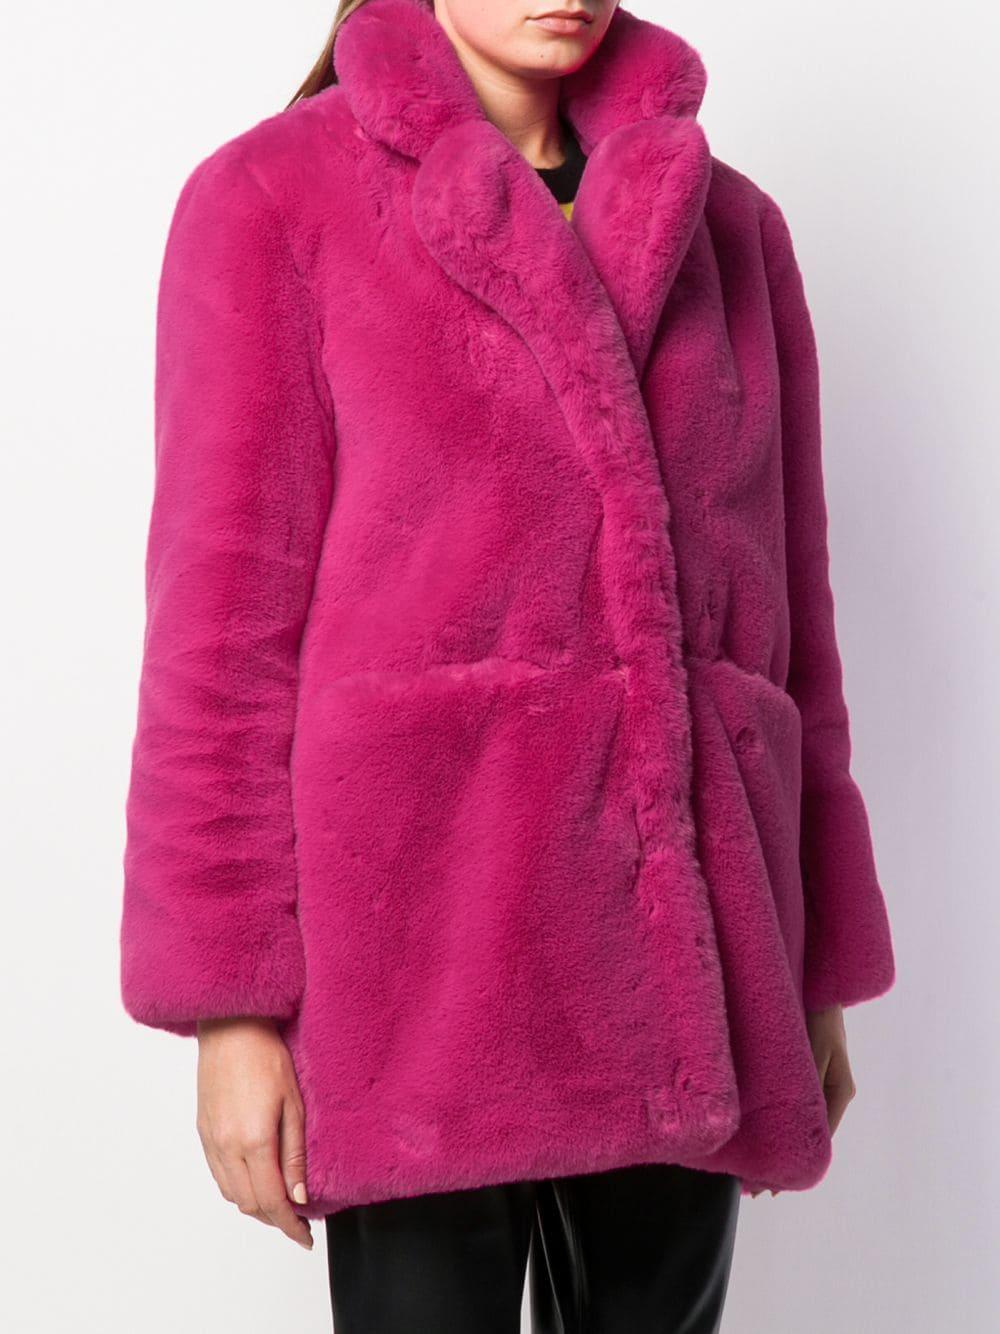 Apparis Faux Fur Coat in Pink - Lyst